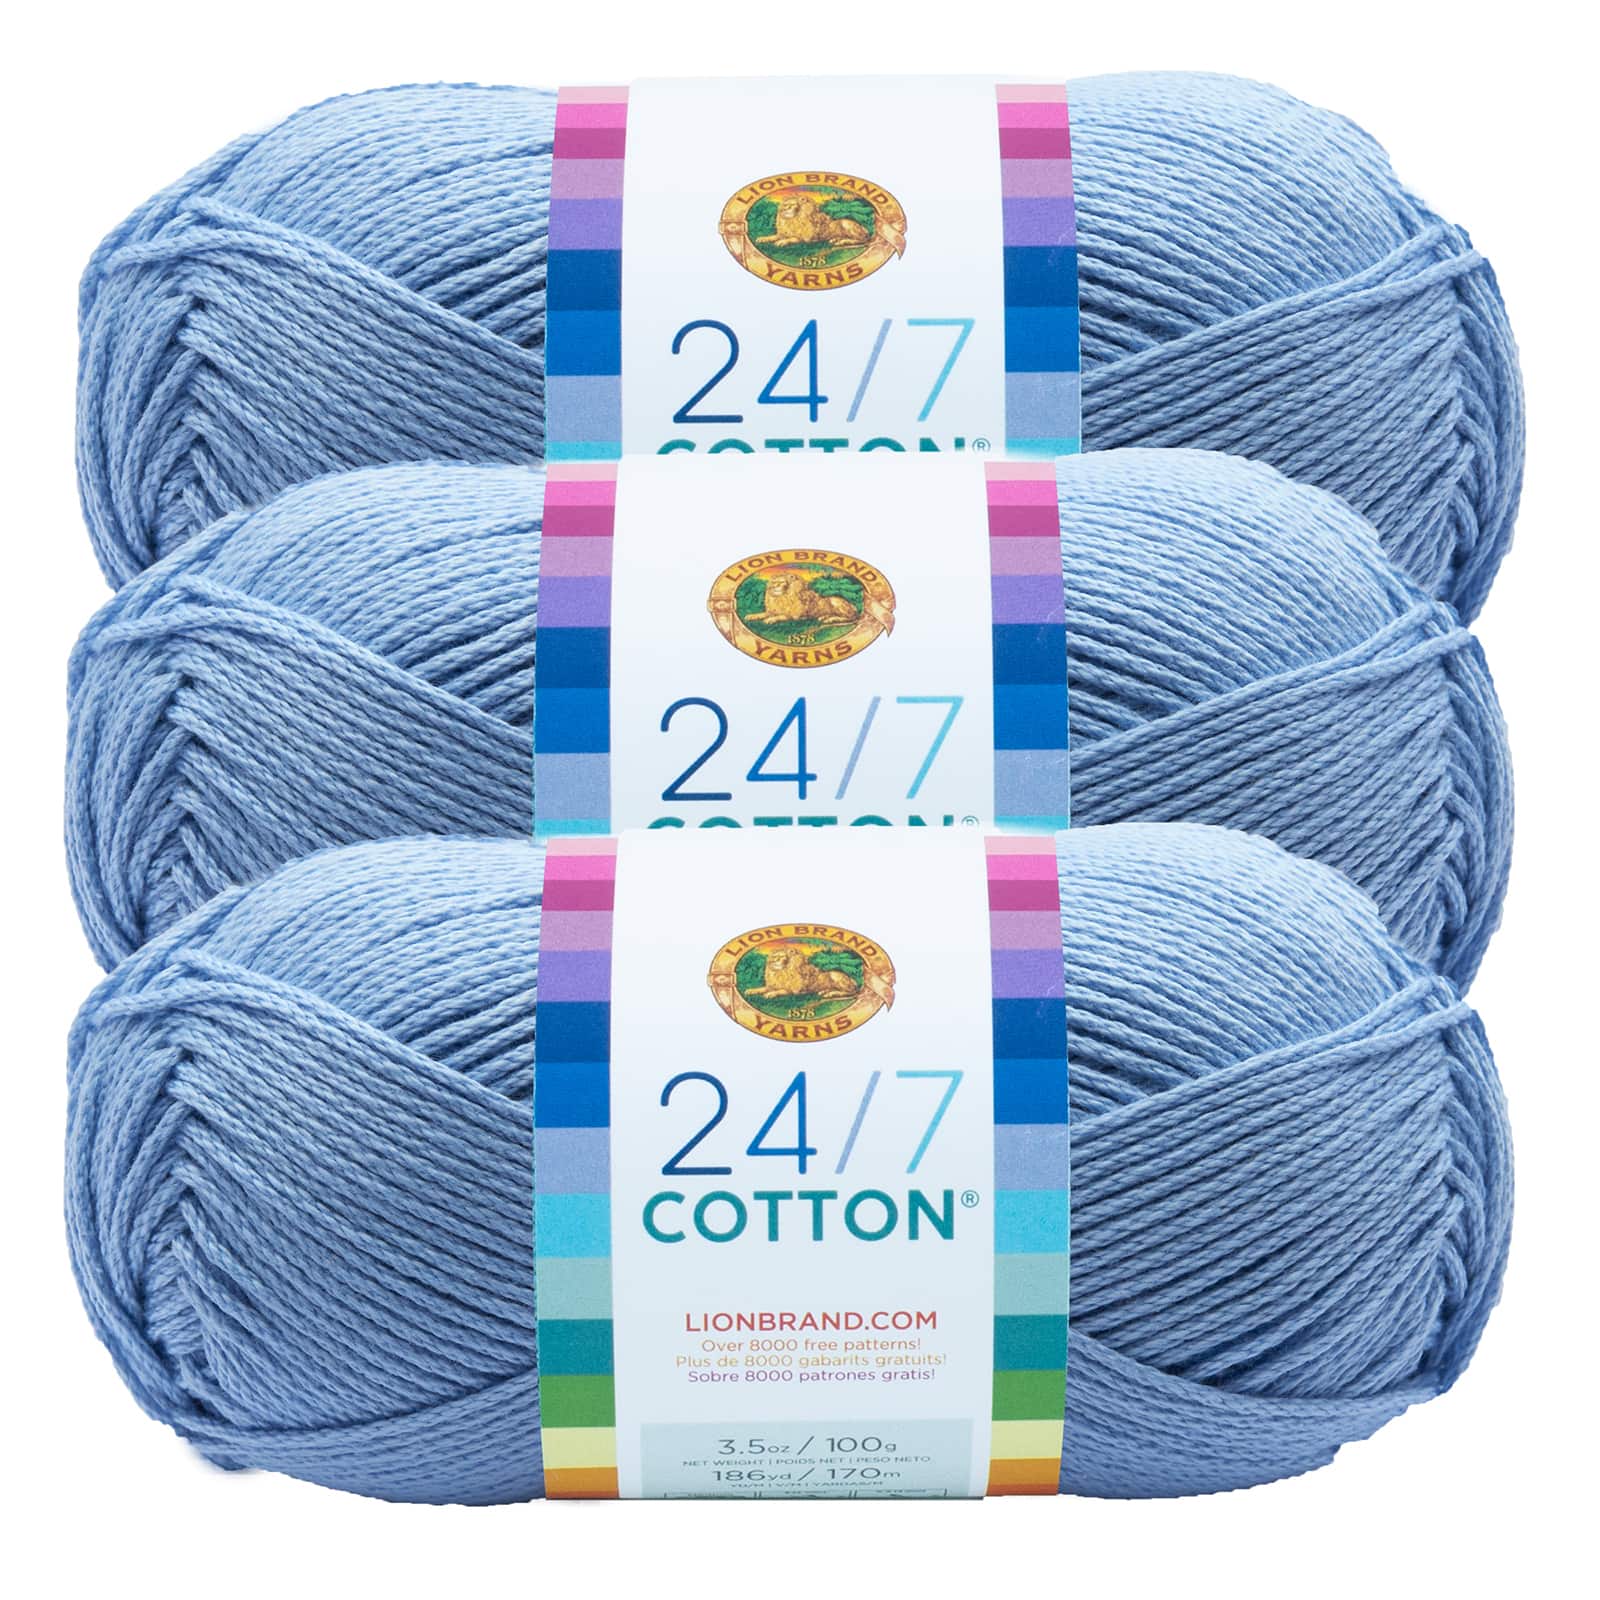 Lion Brand Yarn Camel, 24/7 Cotton Yarn, Mercerized Cotton Yarn